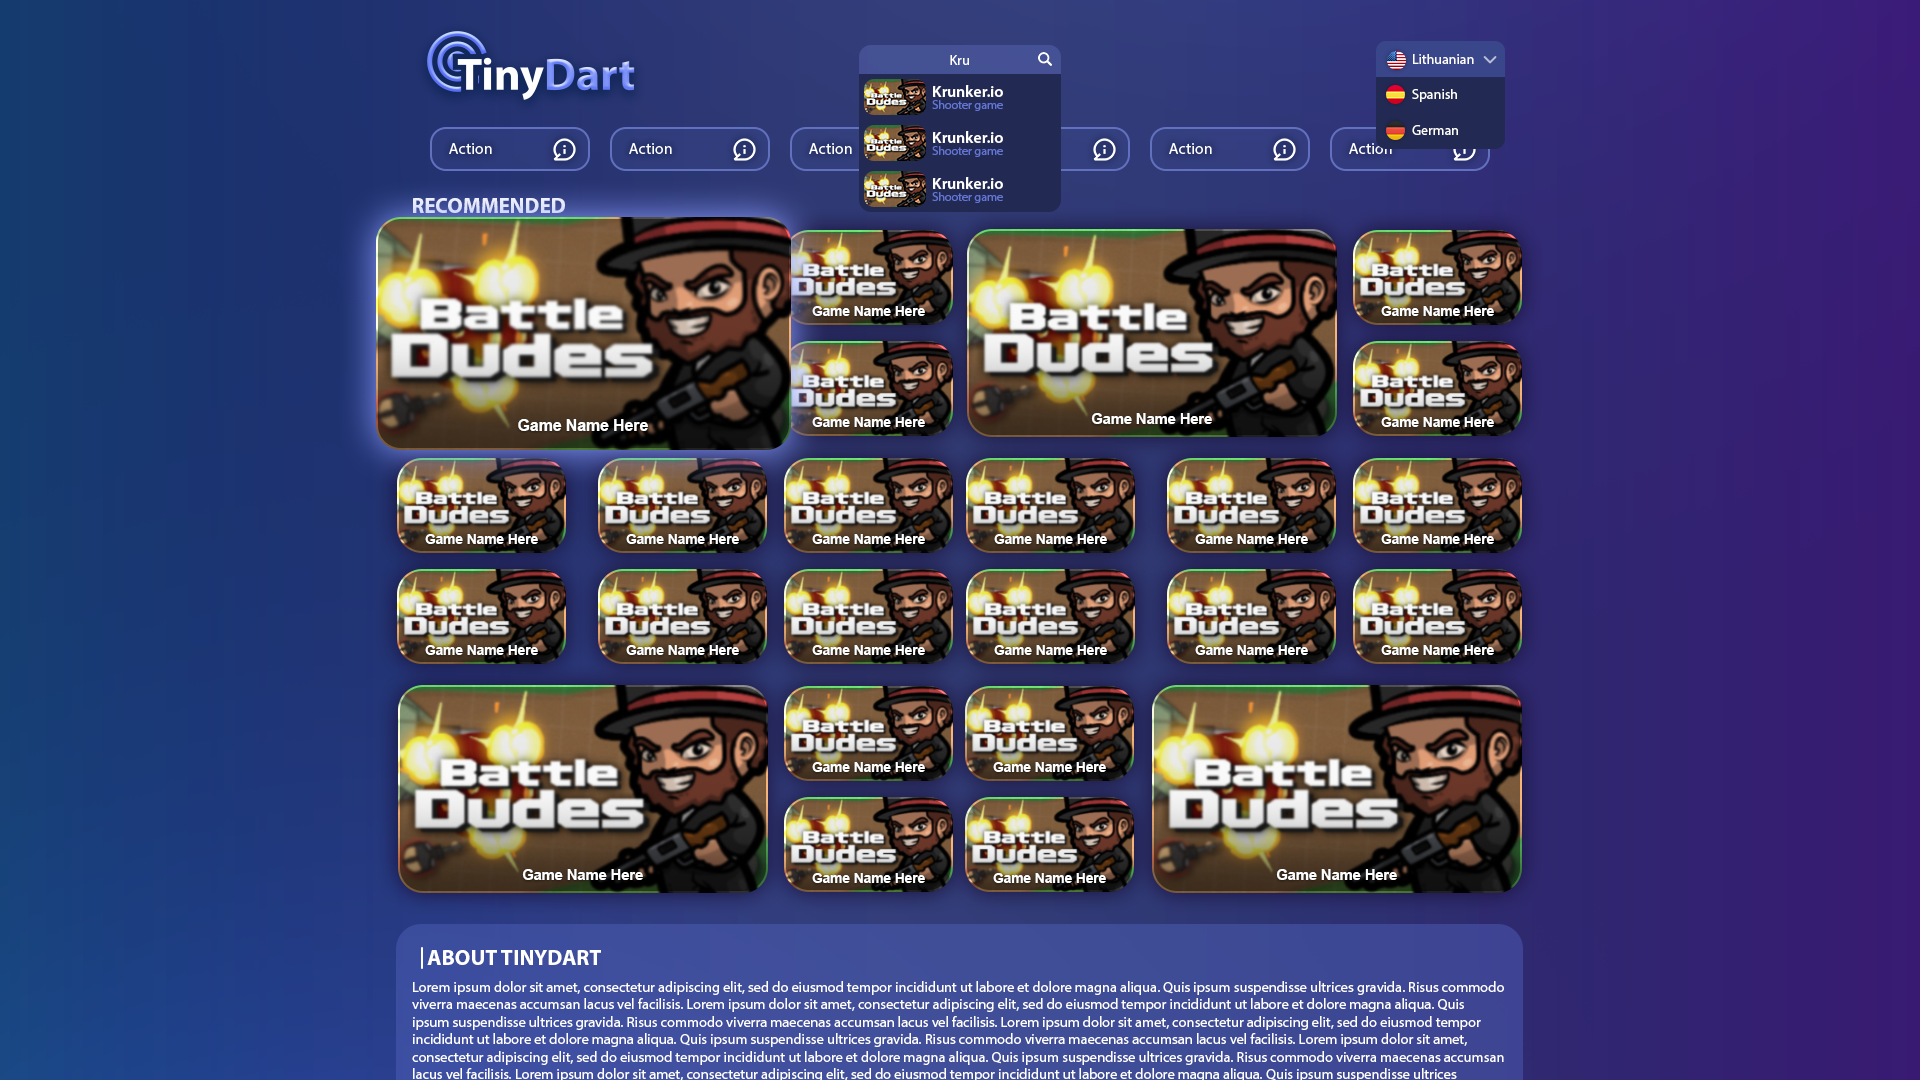 tinydart.com games list main page